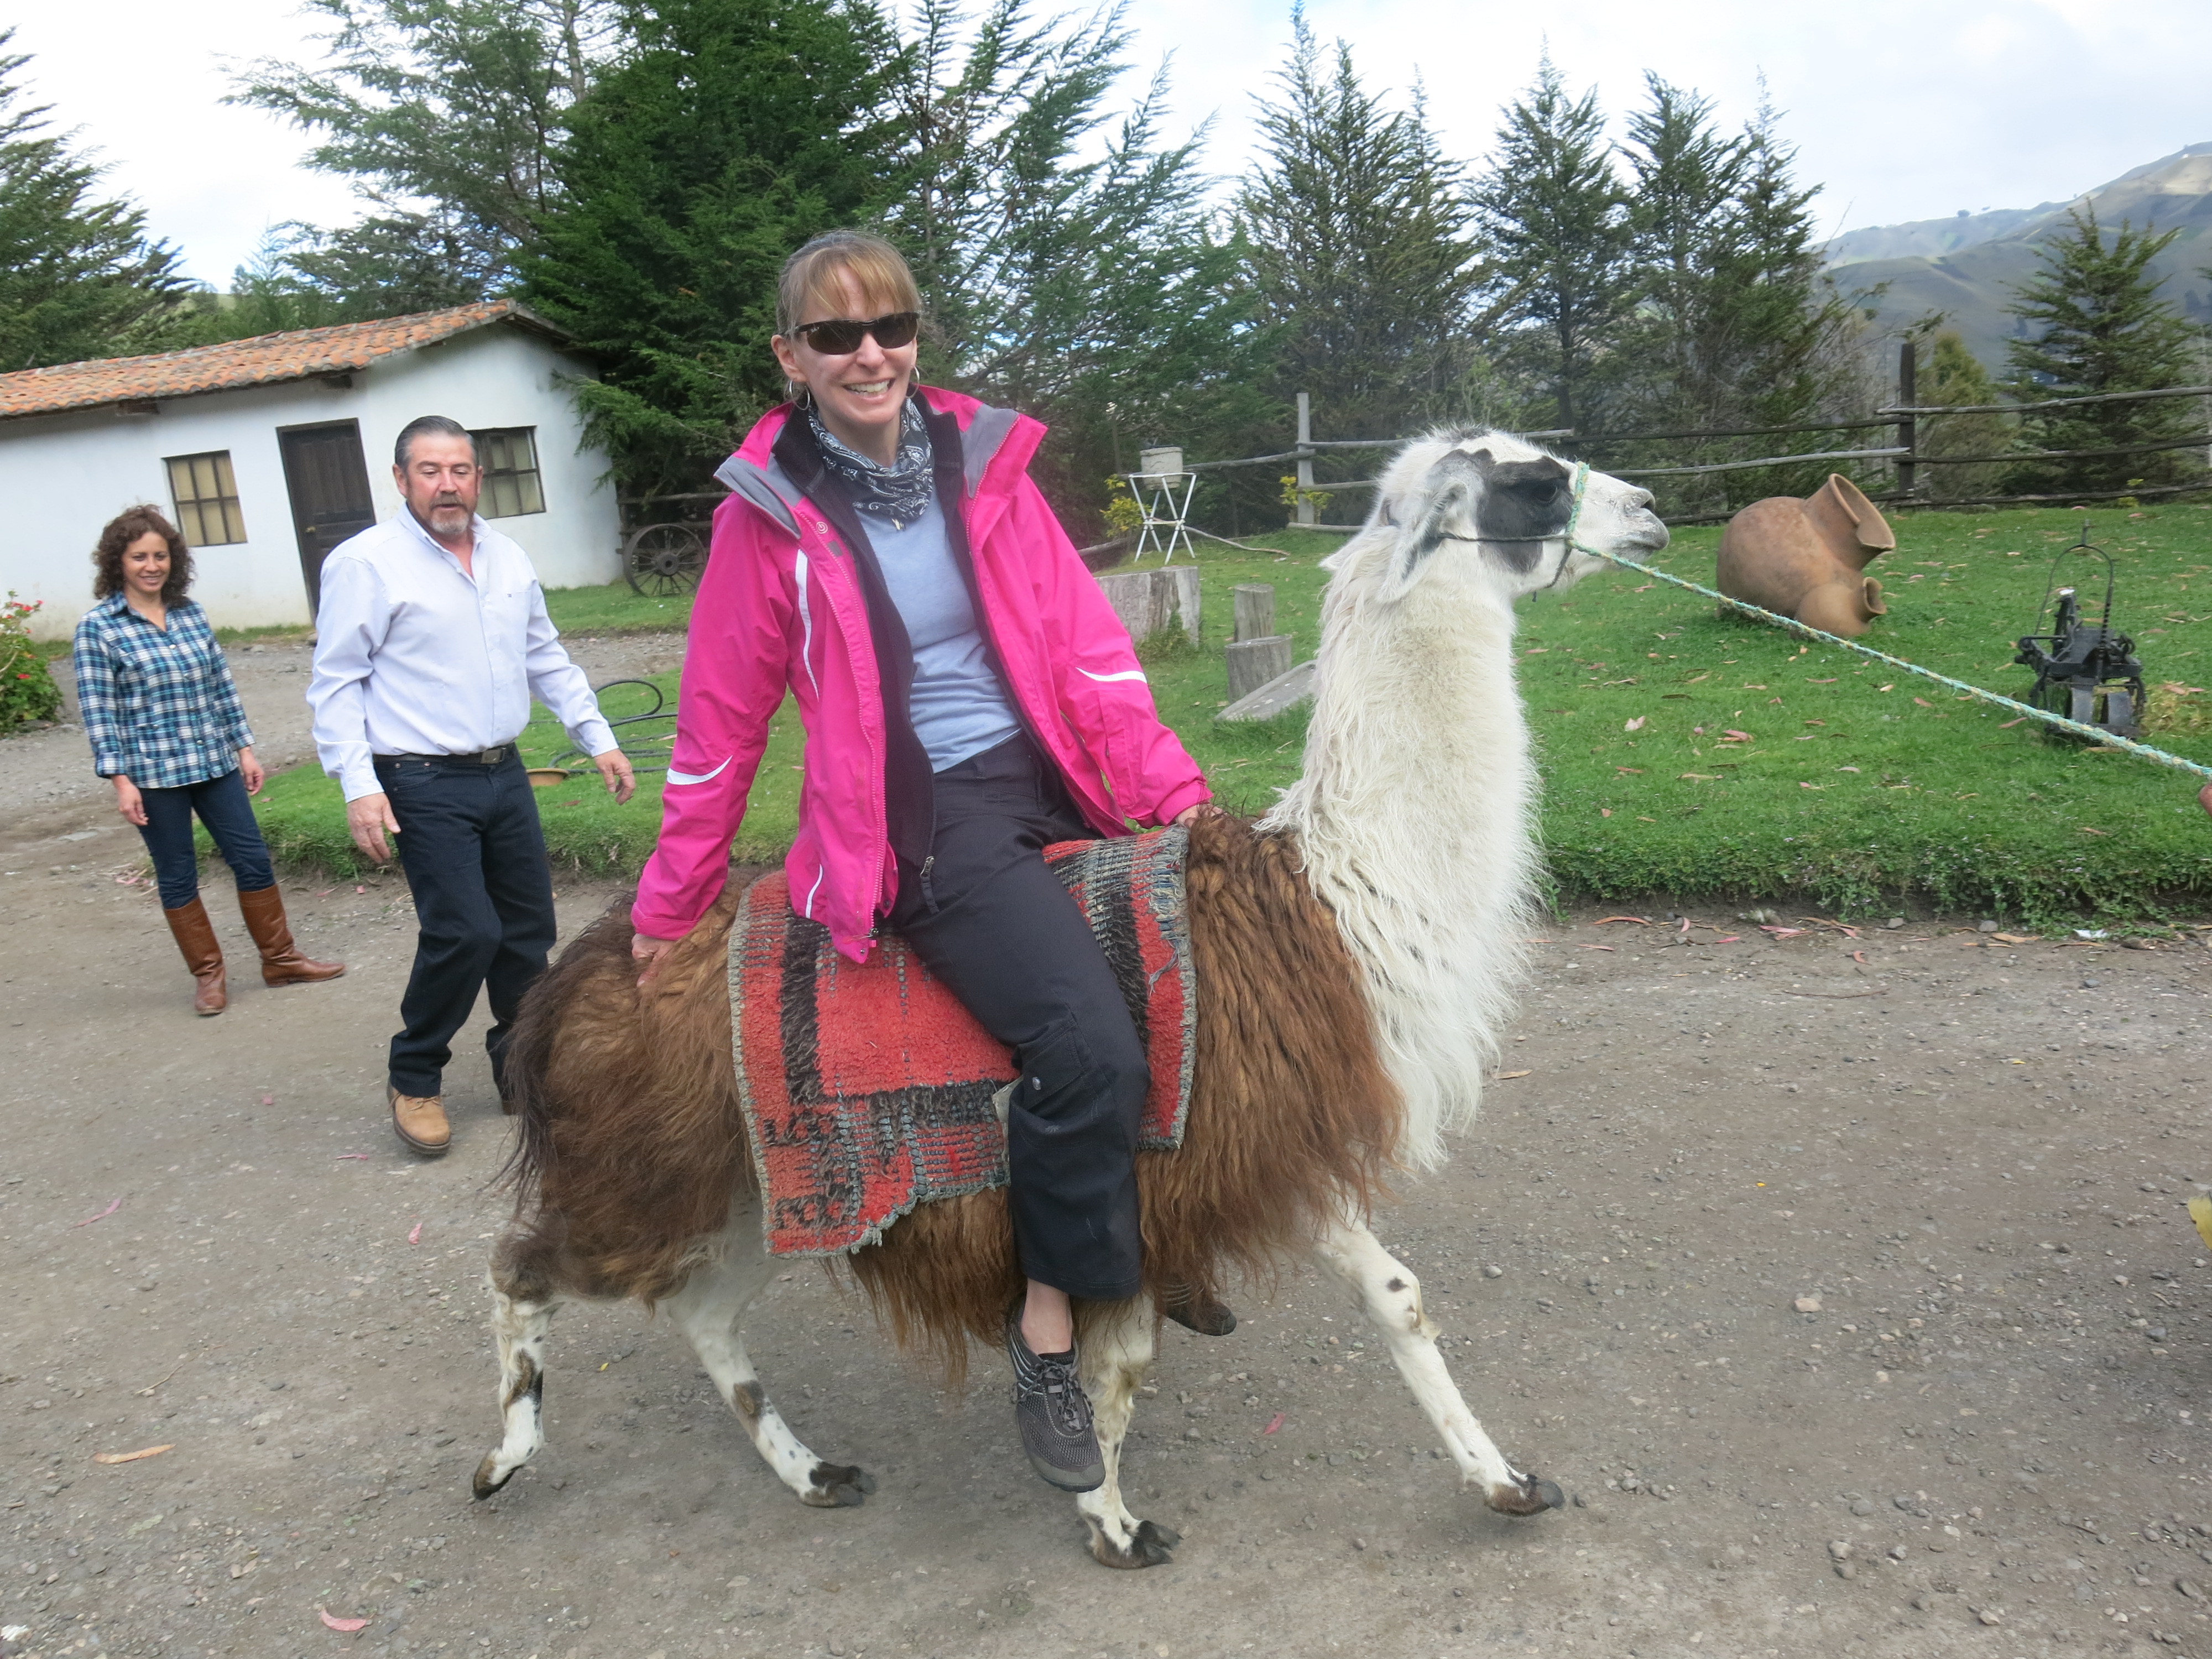 Can You Ride a Llama?